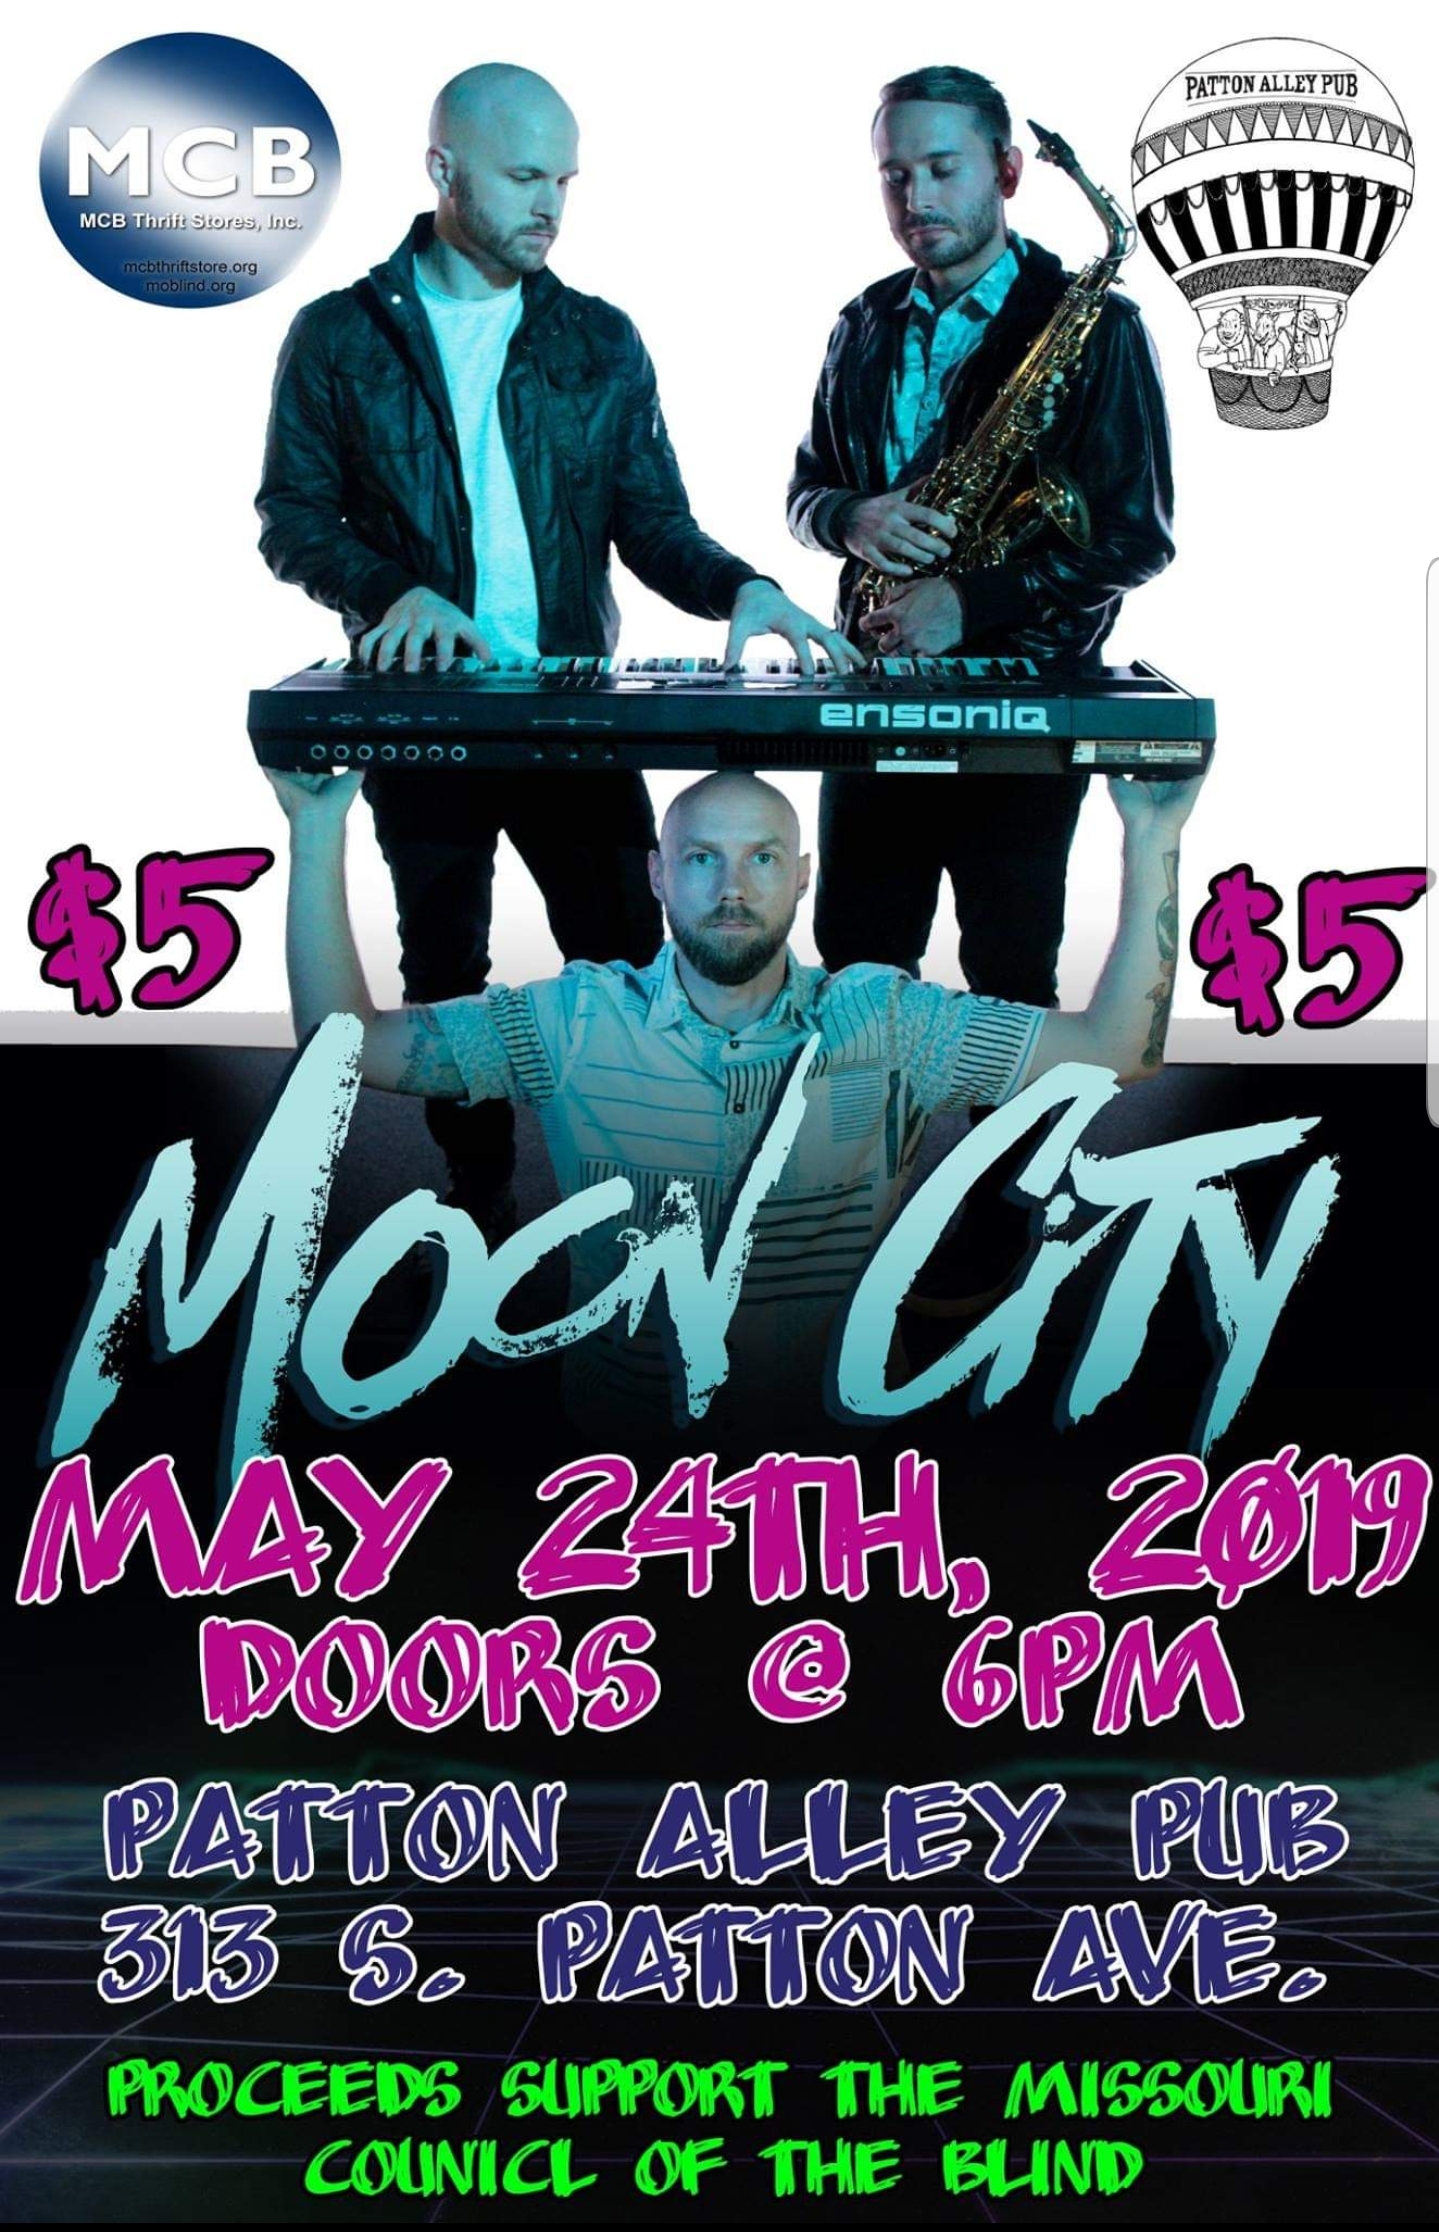 Moon City at Patton Alley Pub